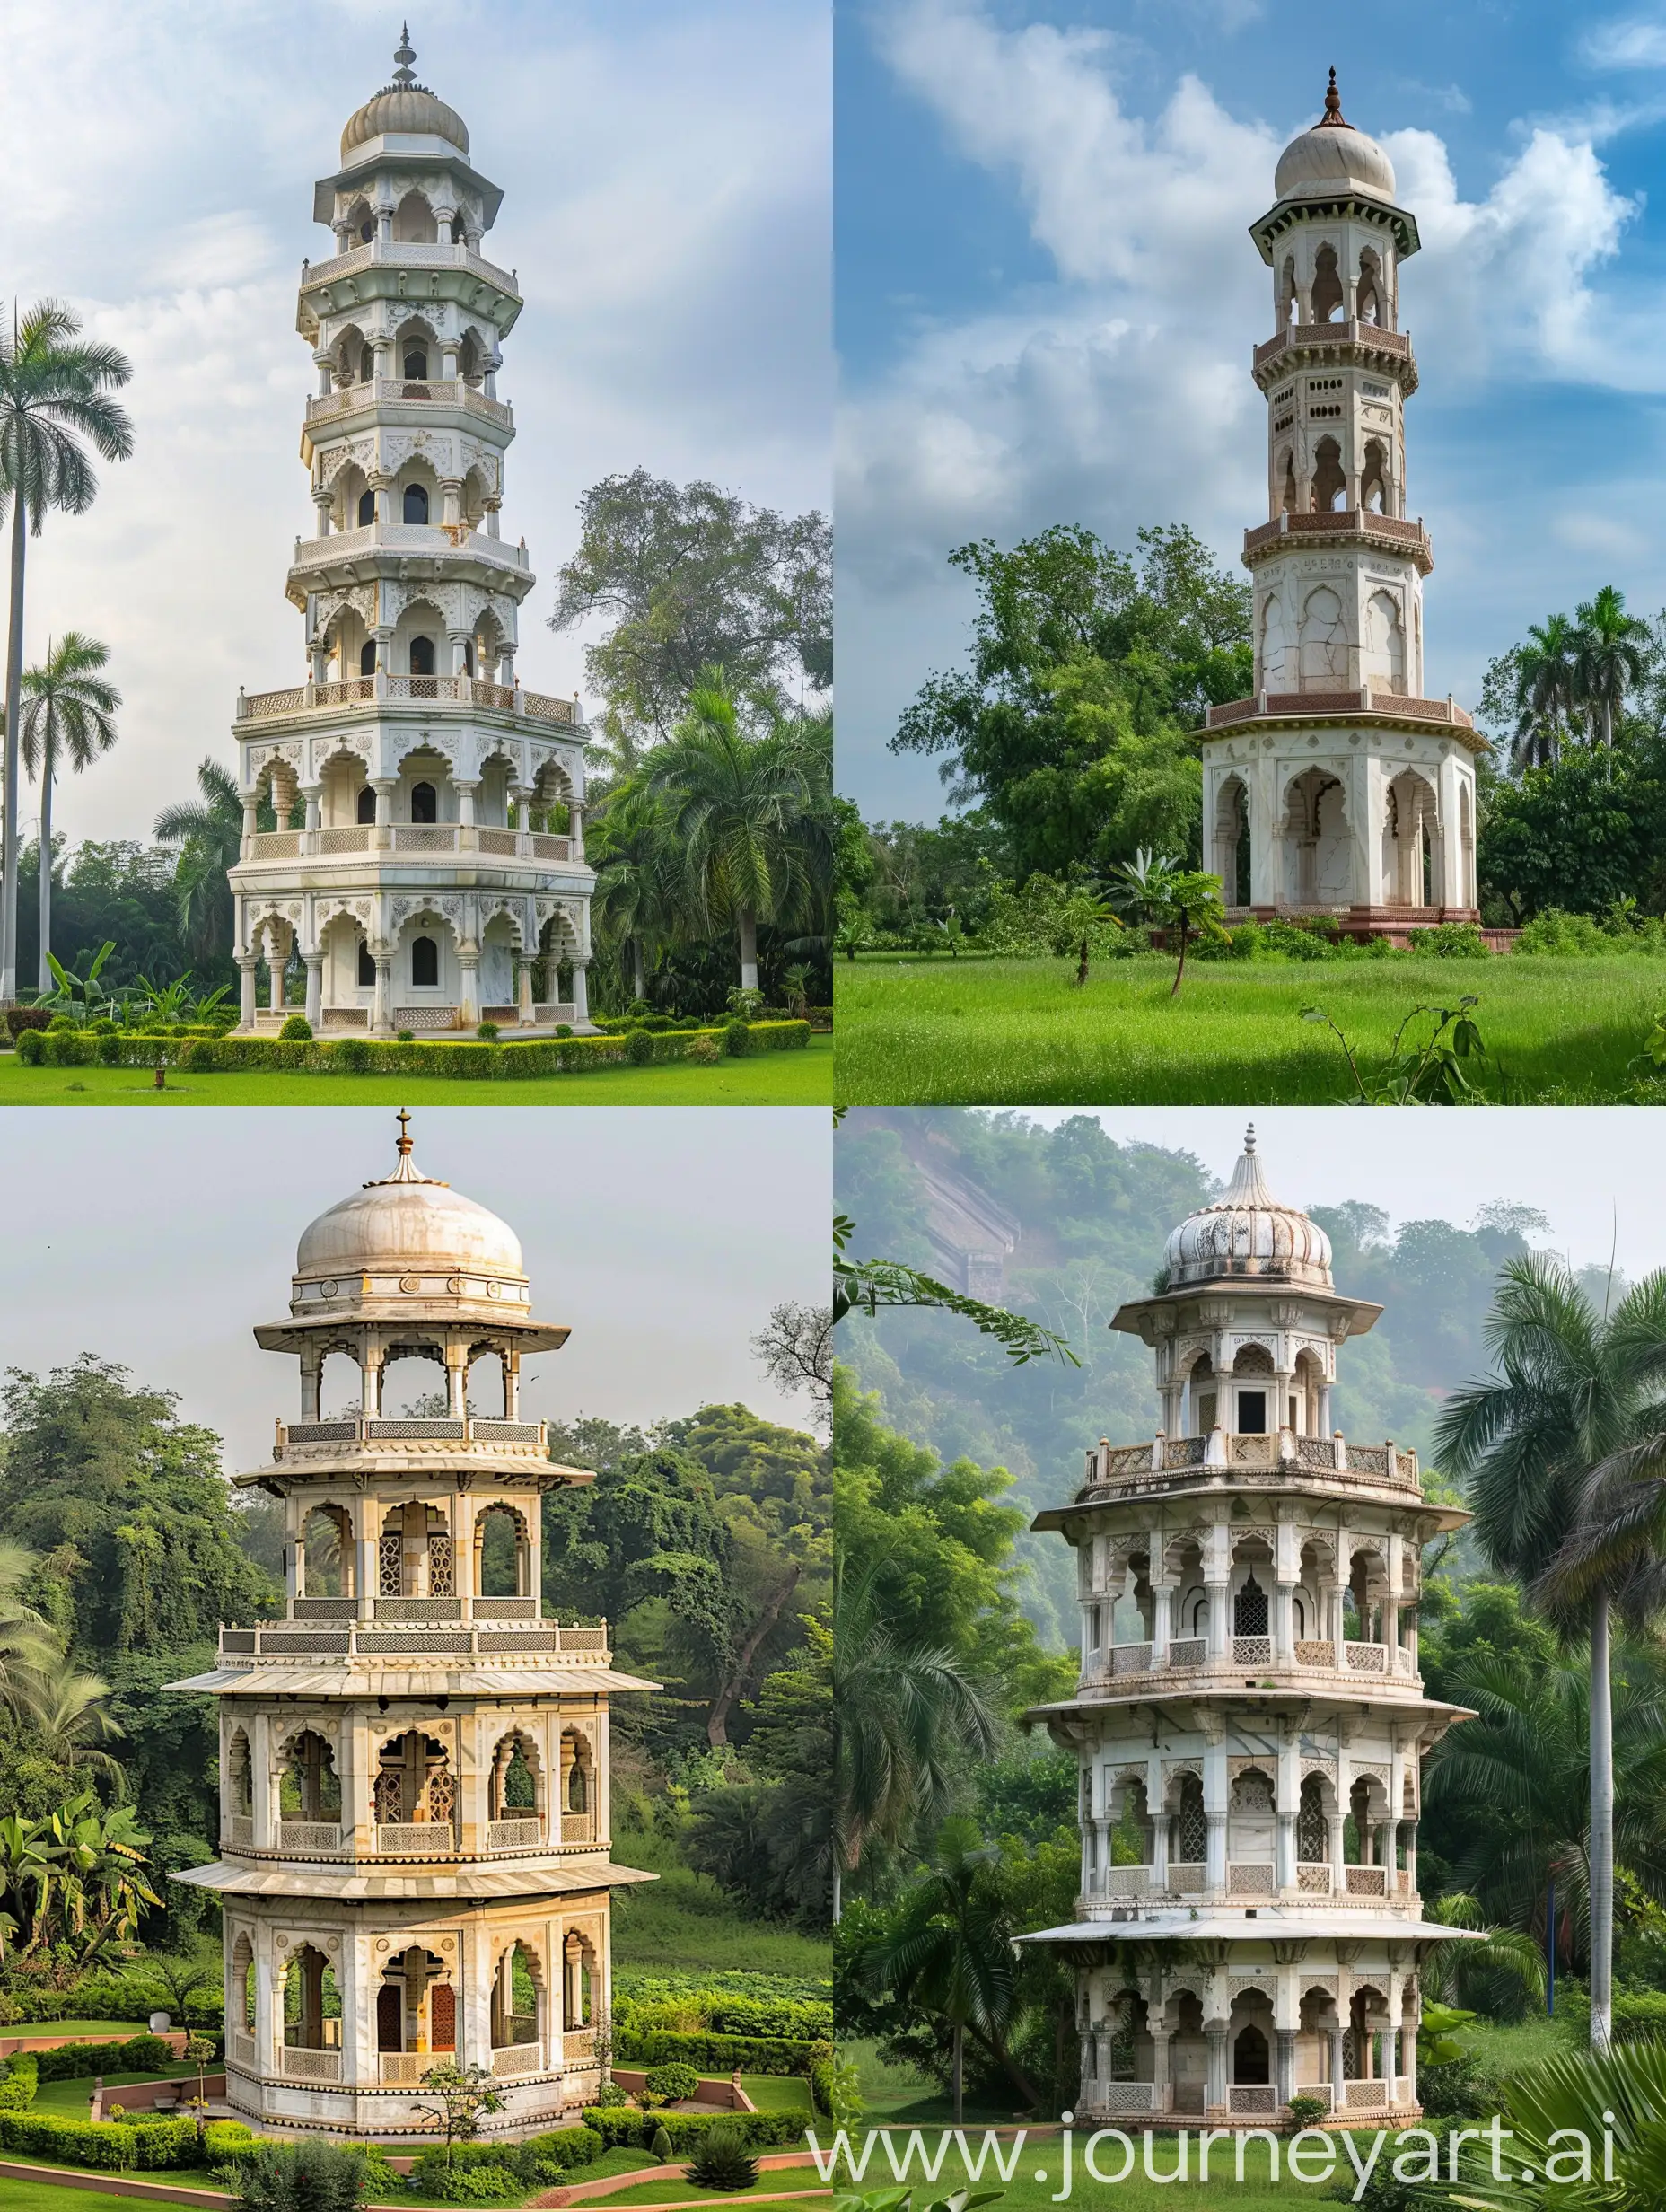 Majestic-Mughal-Minaret-with-Pietra-Dura-Decorations-in-Lush-Green-Field